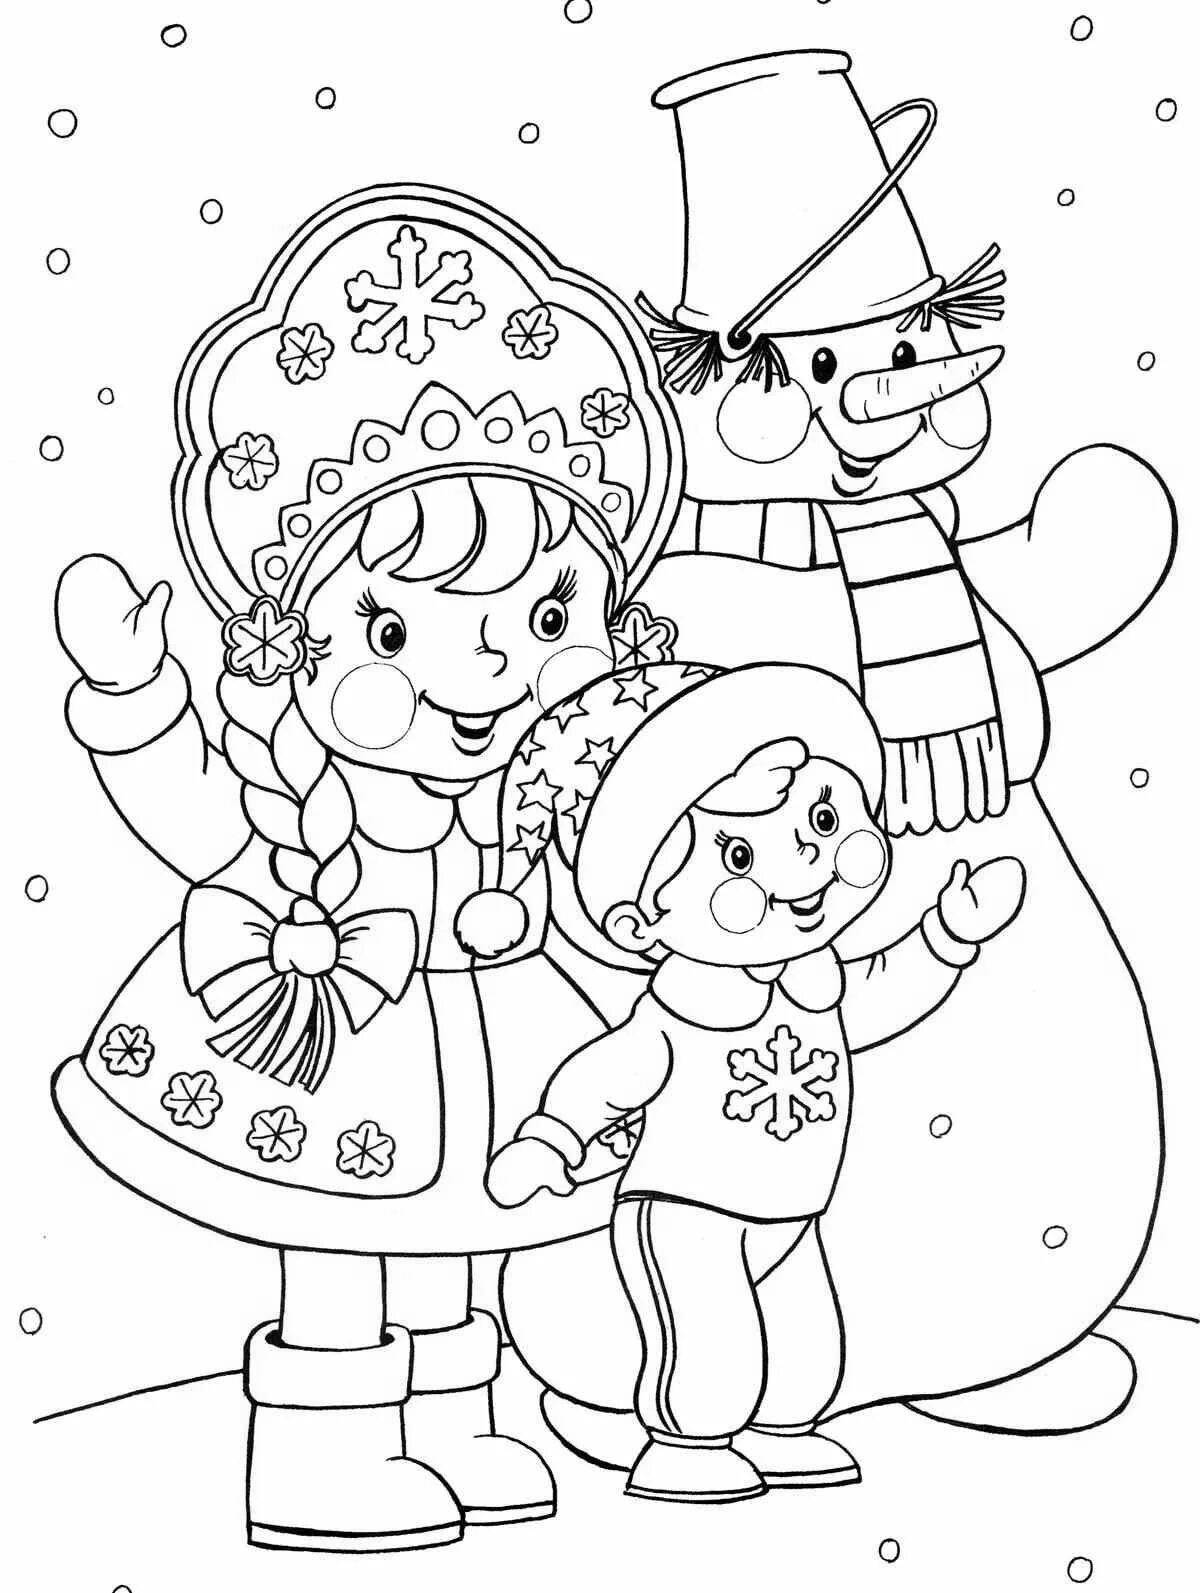 Joyful Christmas coloring book for preschoolers